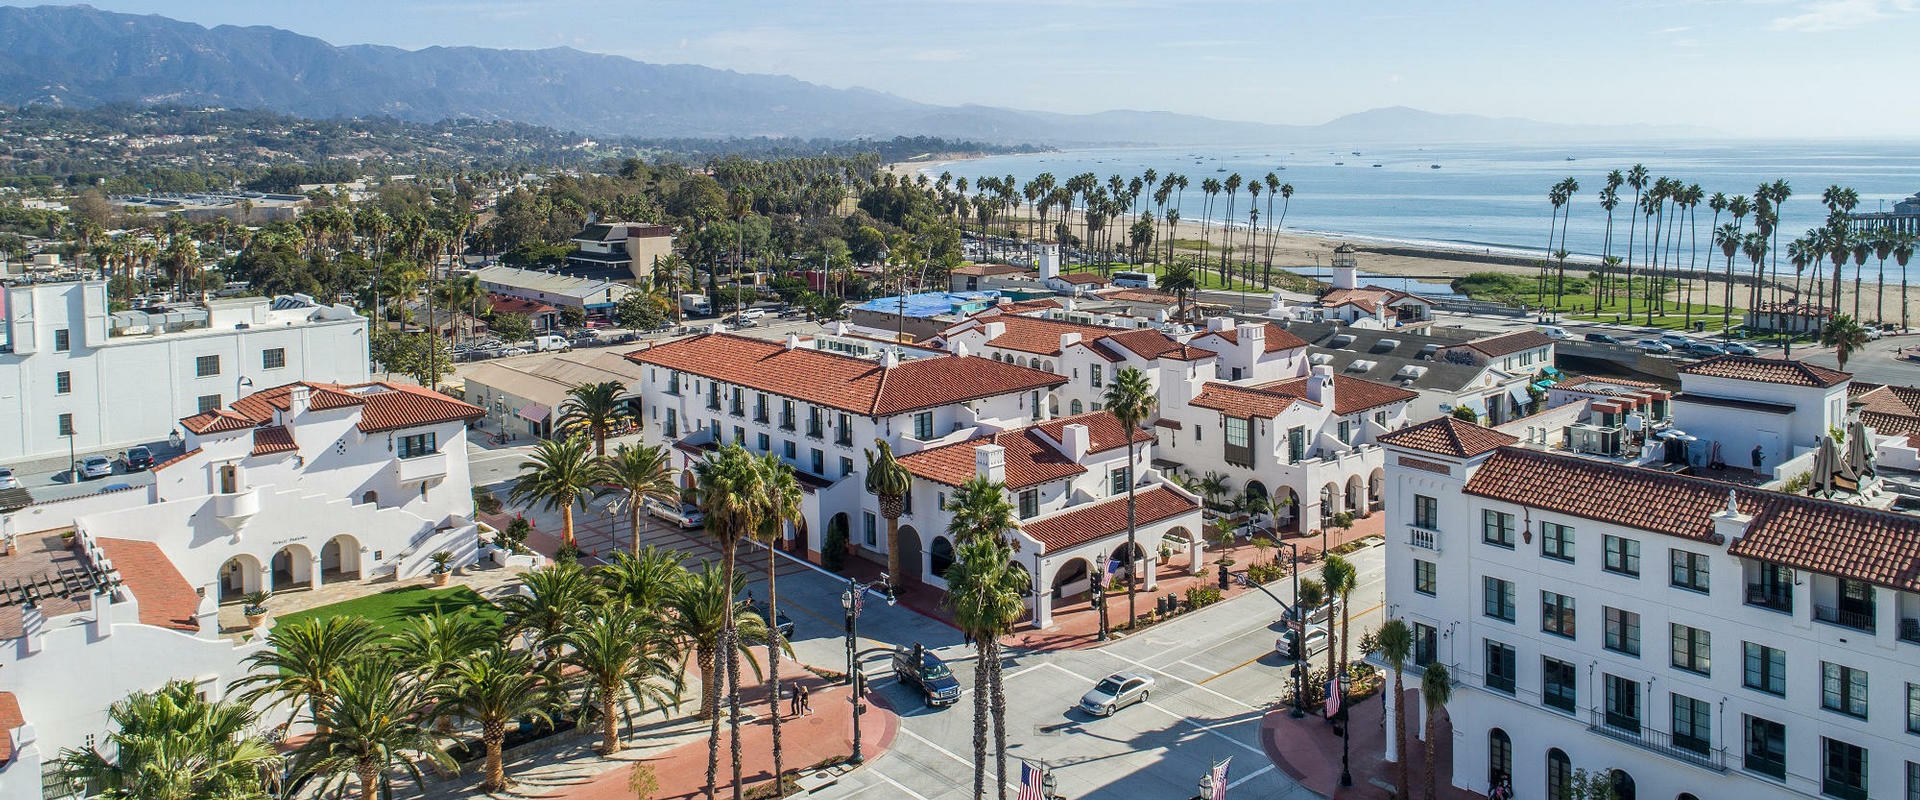 Photo of Hotel Californian, Santa Barbara, CA